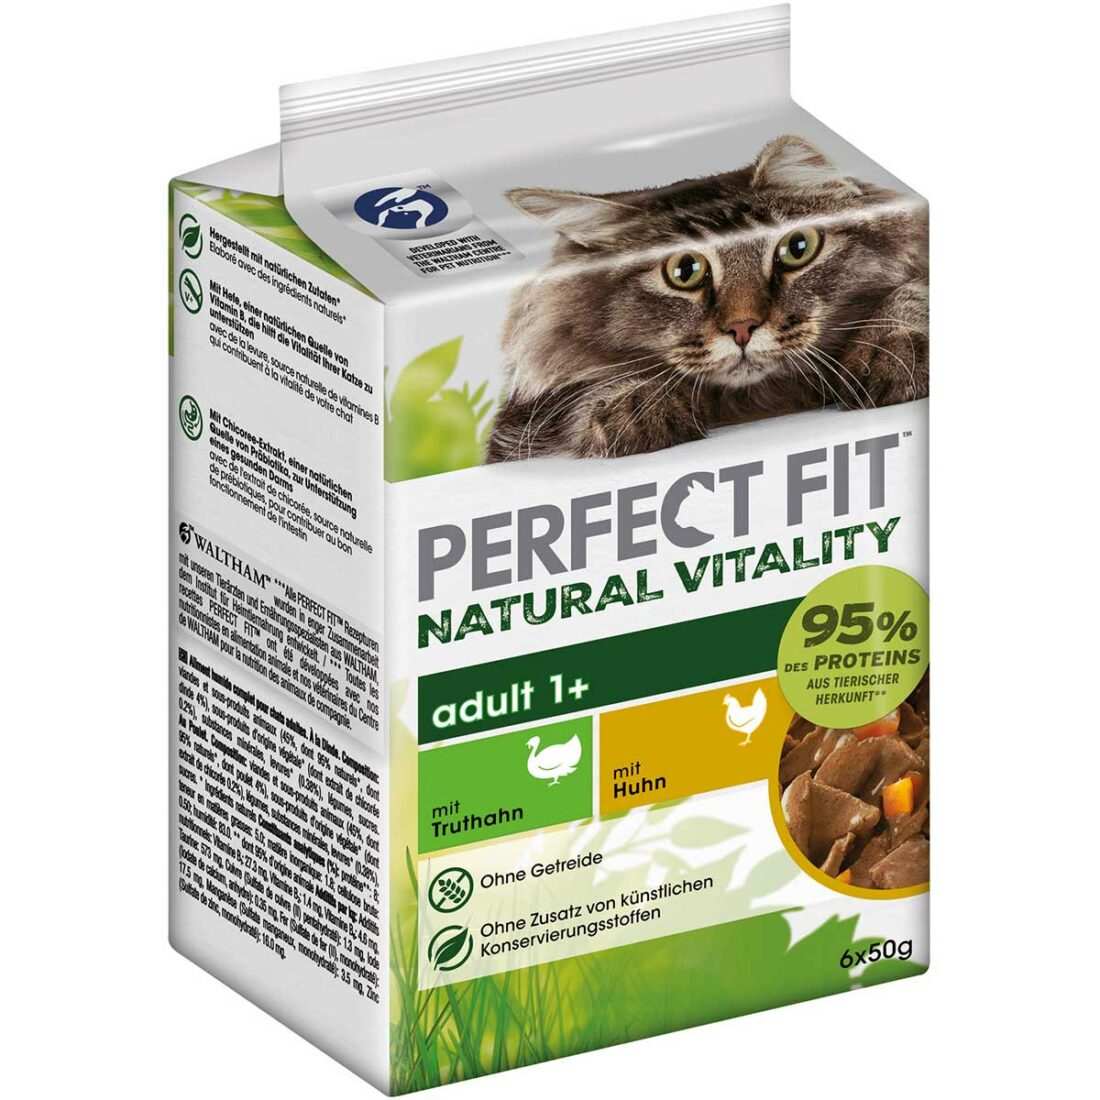 Krmivo pro kočky PERFECT FIT Natural Vitality Adult 1+